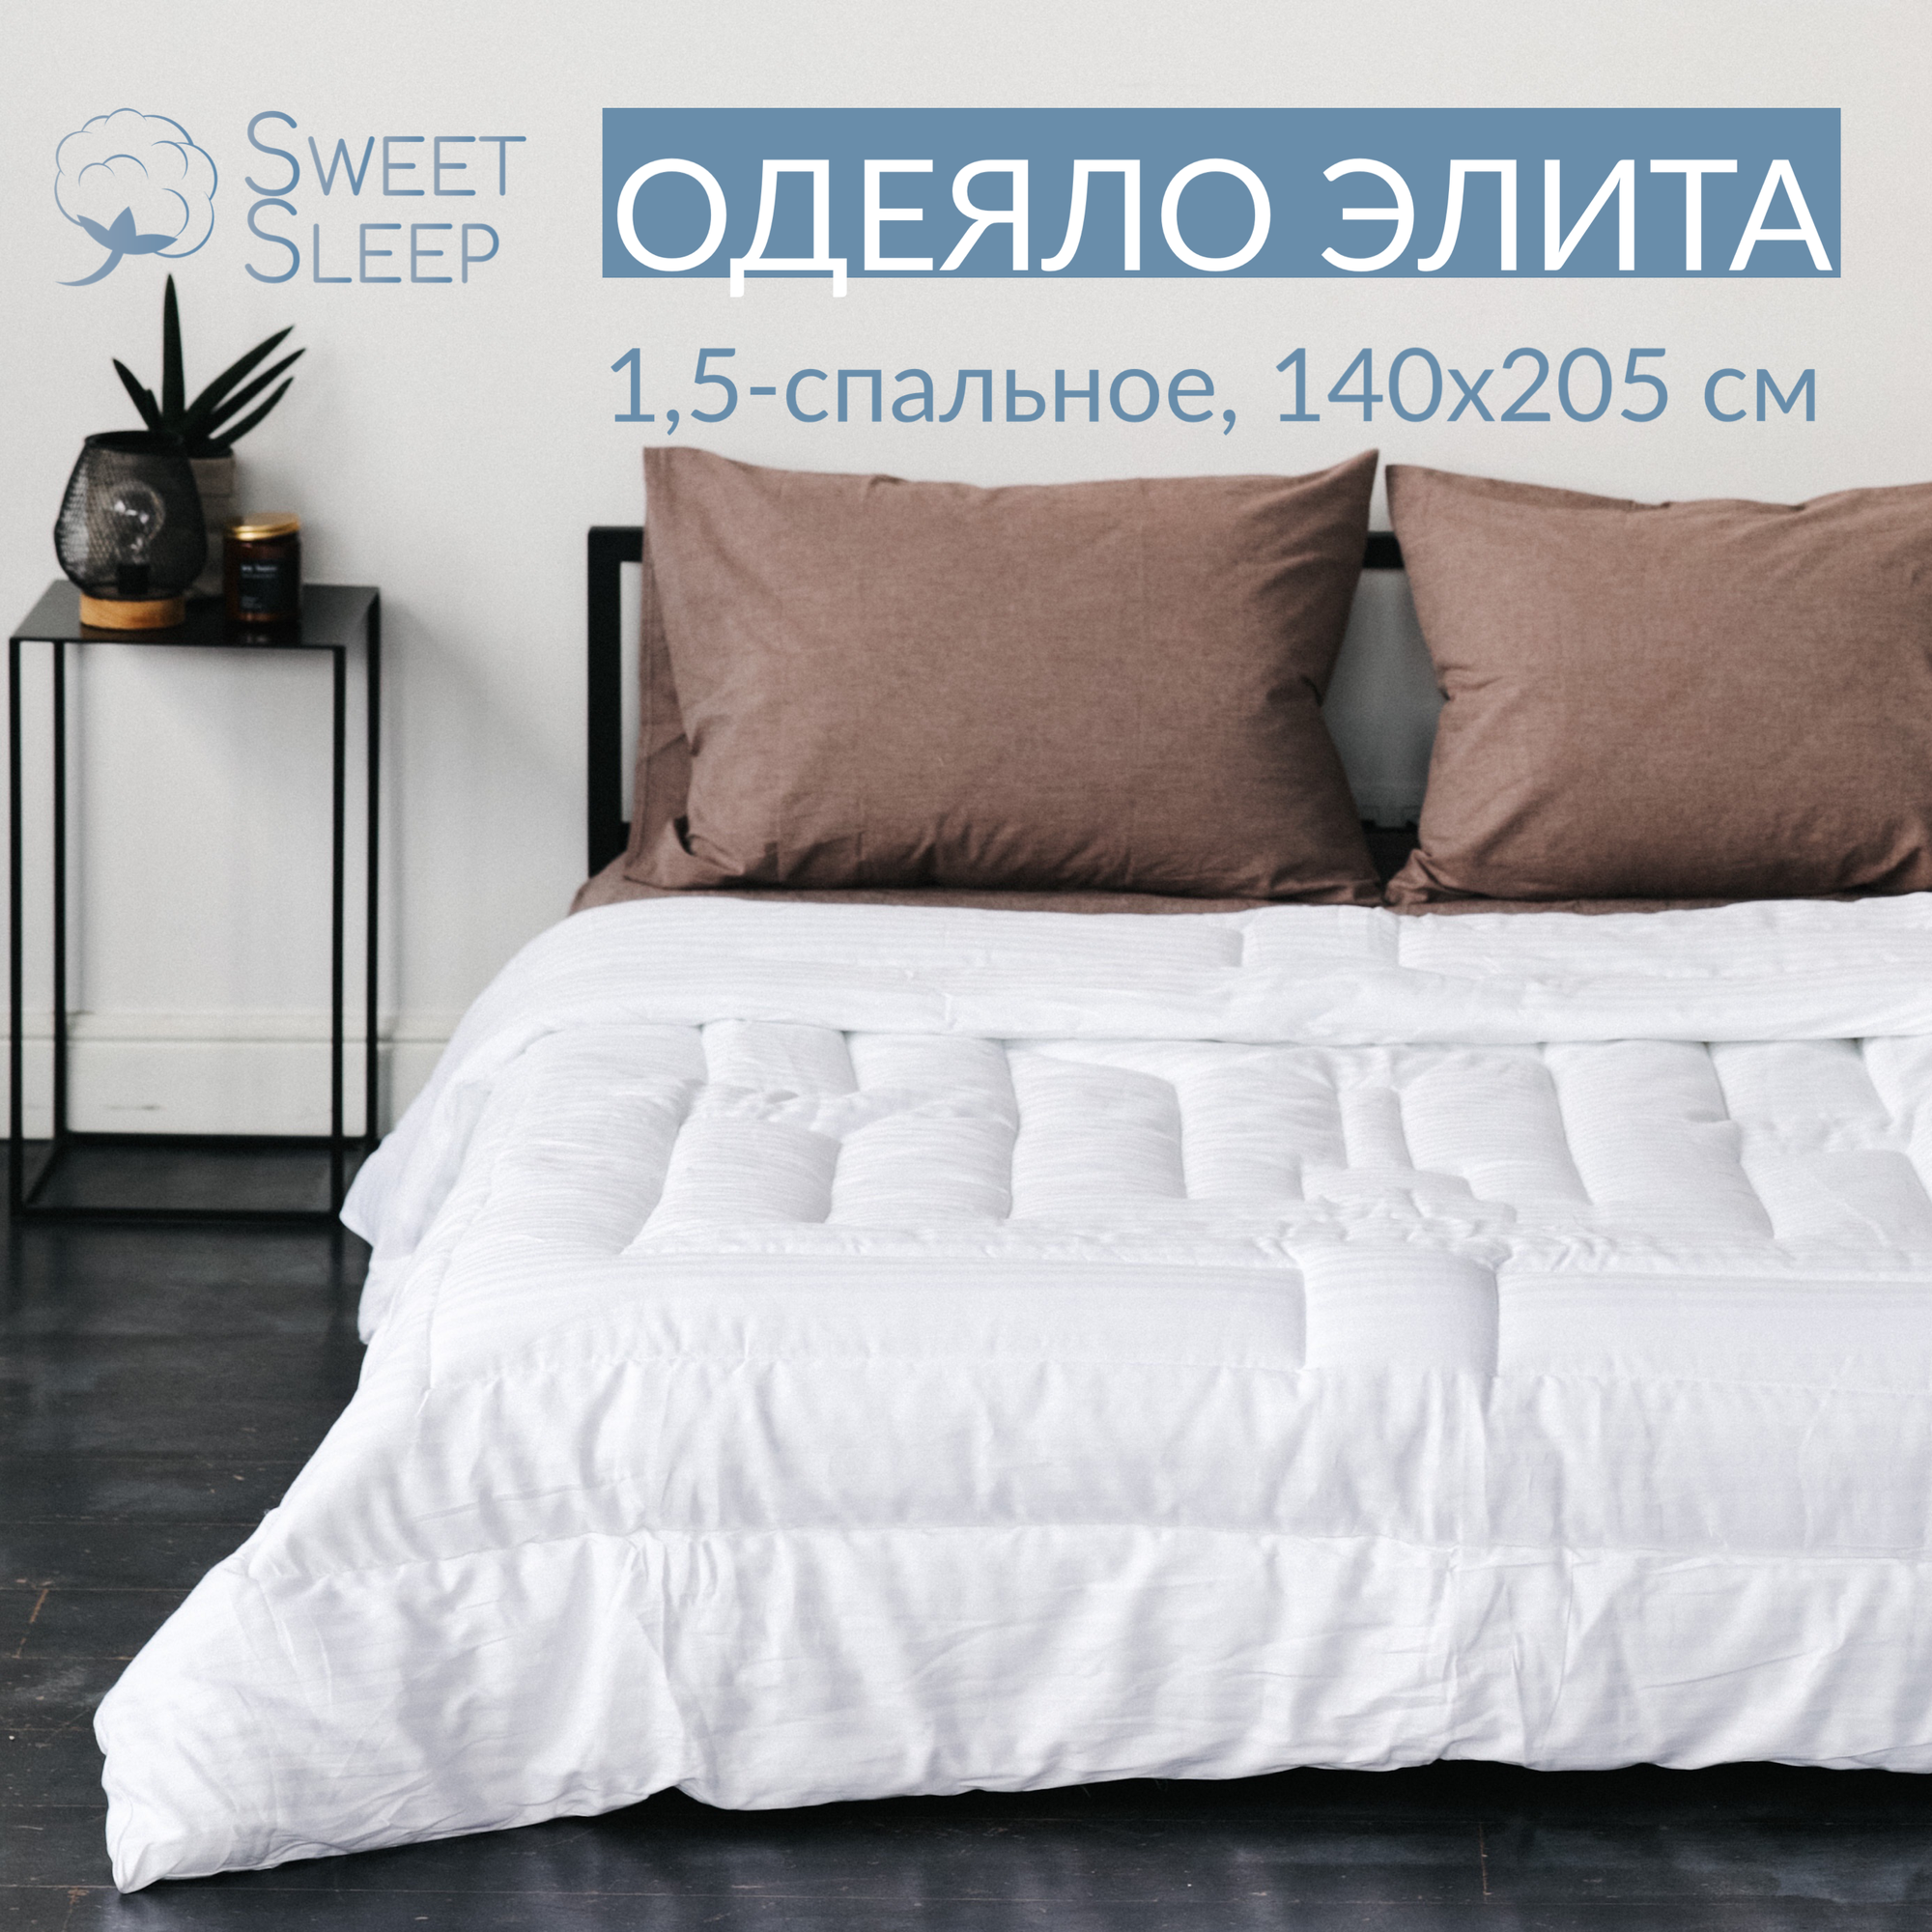 Одеяло Sweet Sleep "Элита" лебяжий пух 140*205 см - фотография № 1